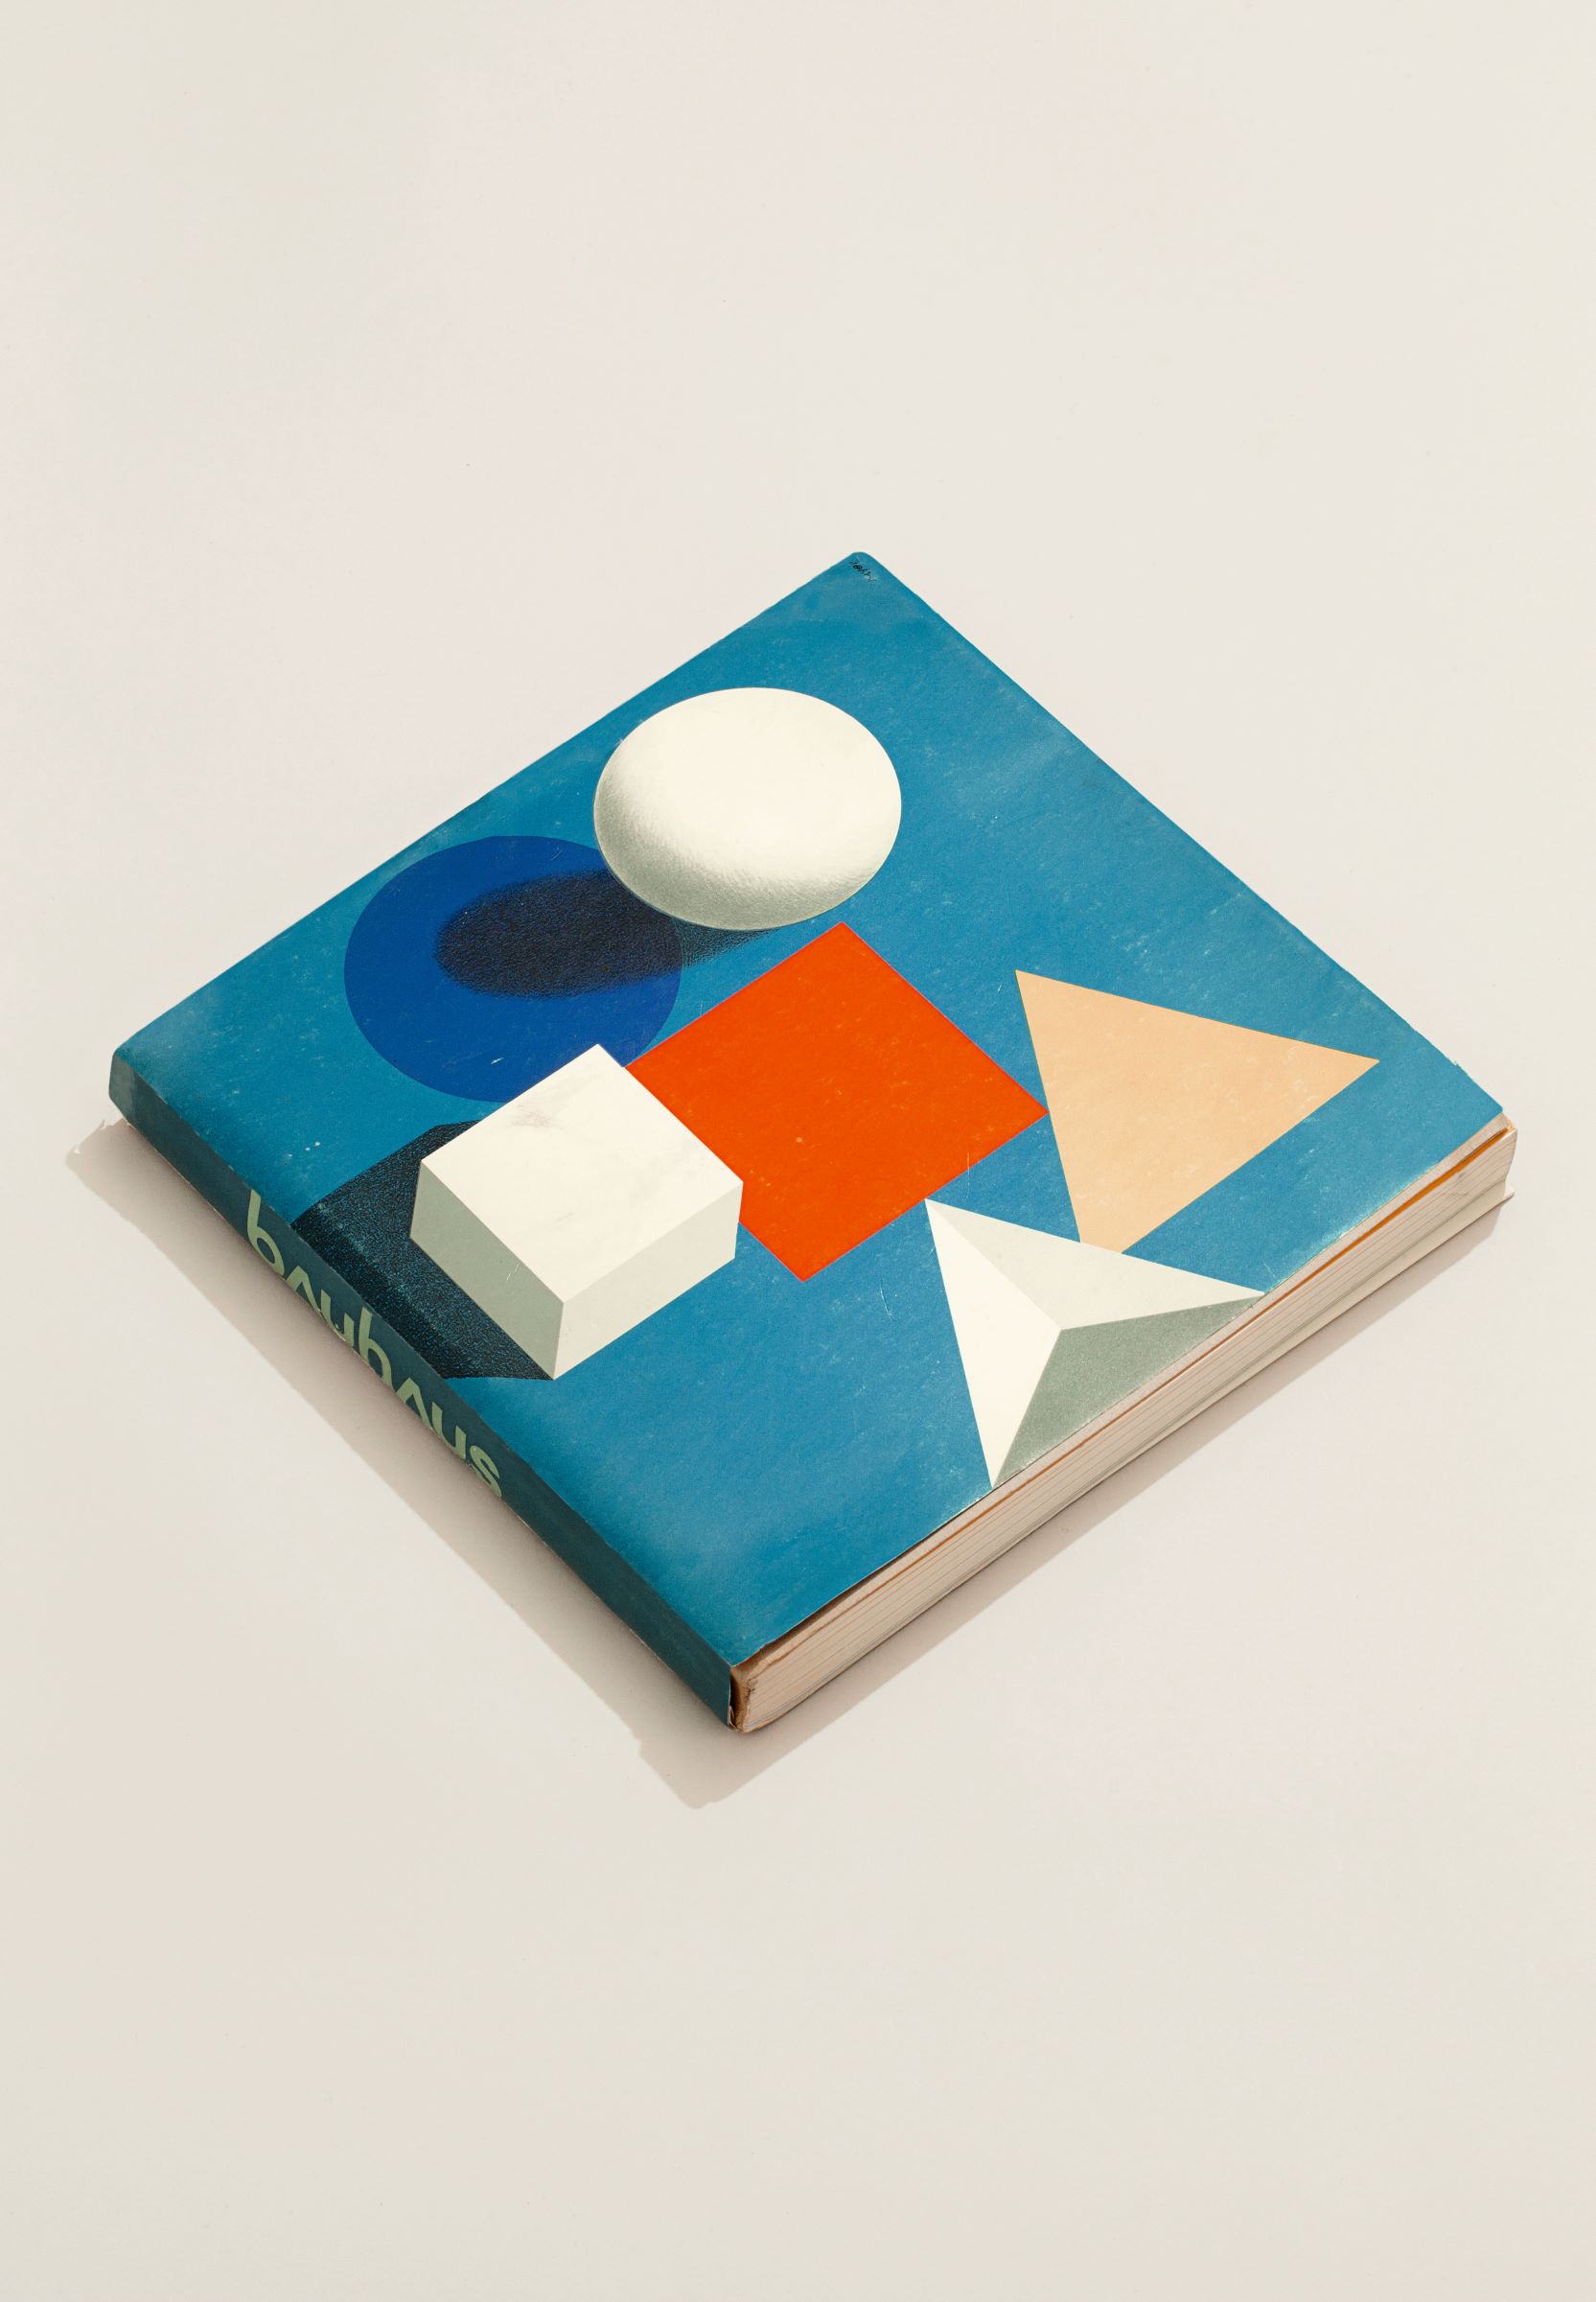 Bauhaus Book. Bauhaus, Royal Academy, London, 1968. Photo by Matthew Donaldson. From Paul Smith